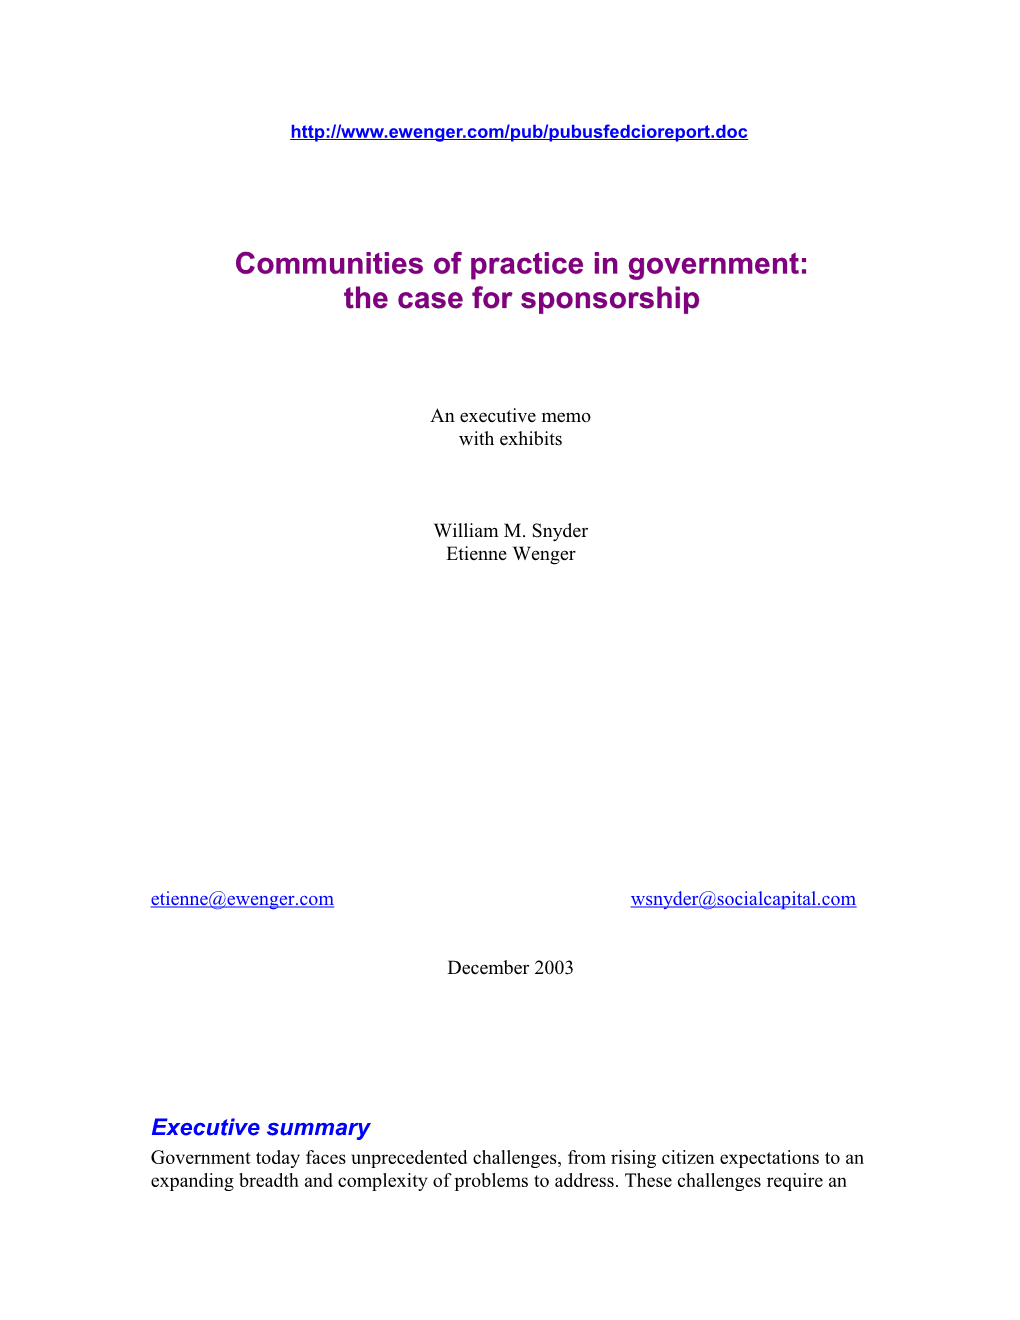 Communities of Practice in Government